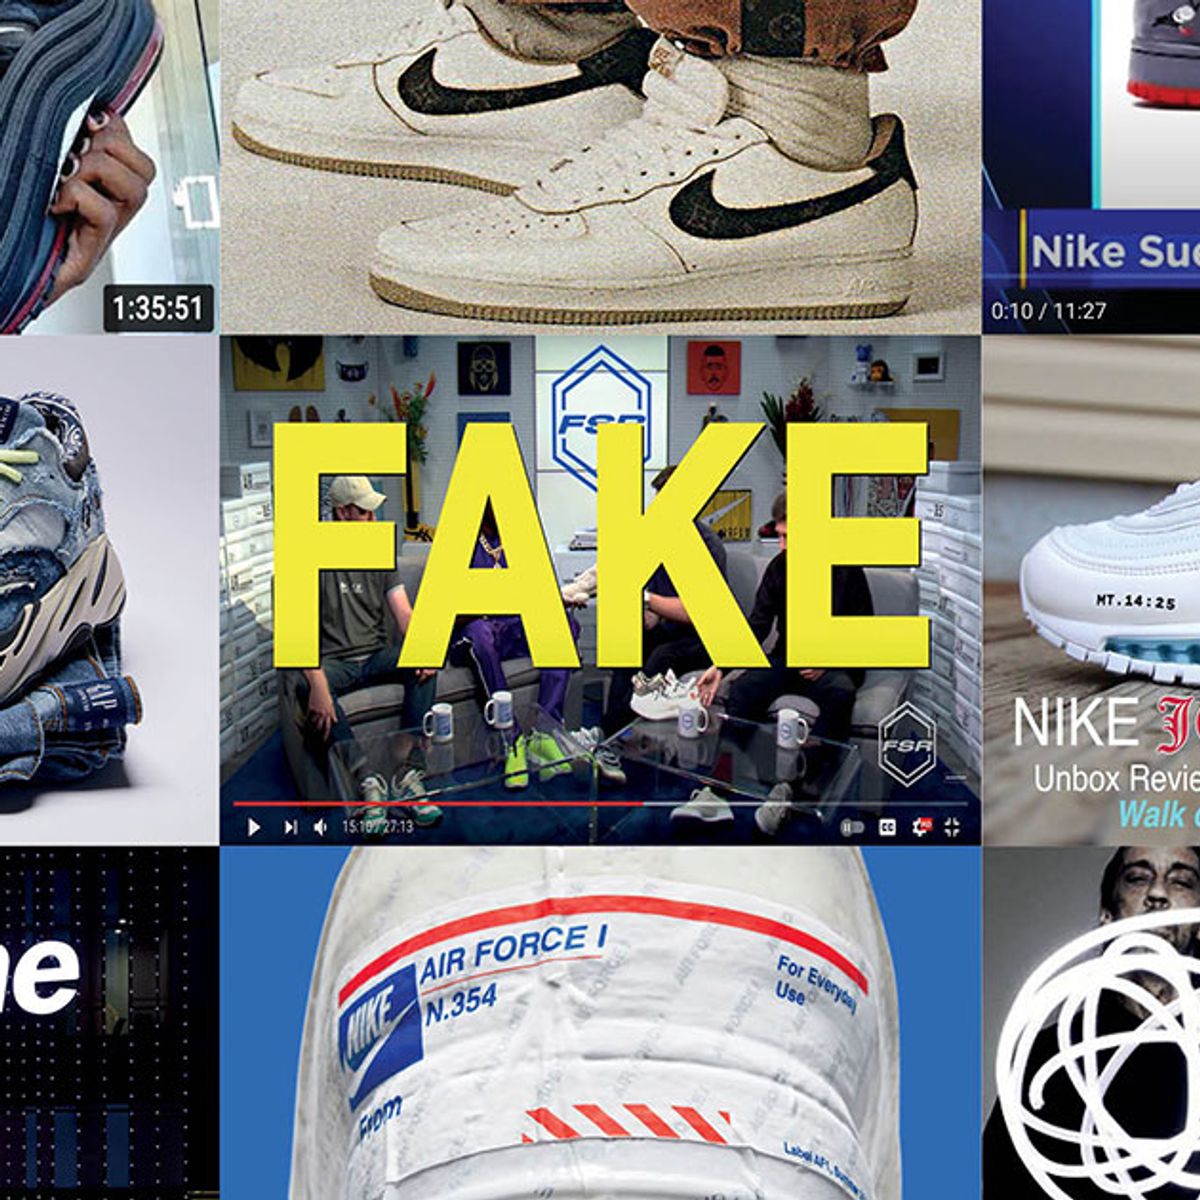 Virgil Abloh and Louis Vuitton: A Sneaker Love Story - Sneaker Freaker